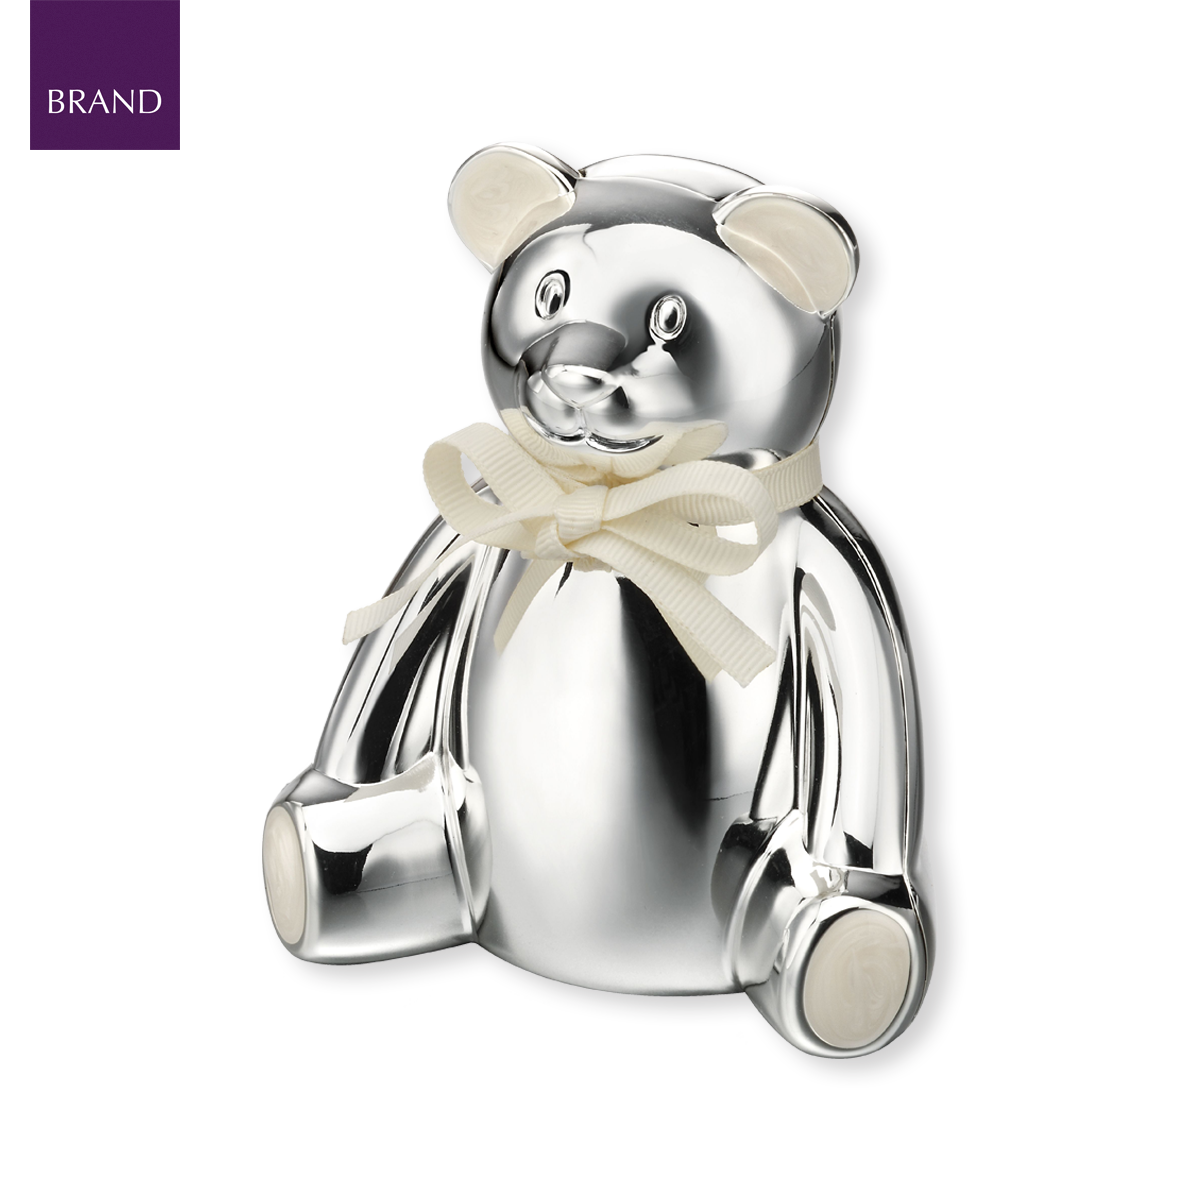 Silver Plated Teddy Bear Money Box